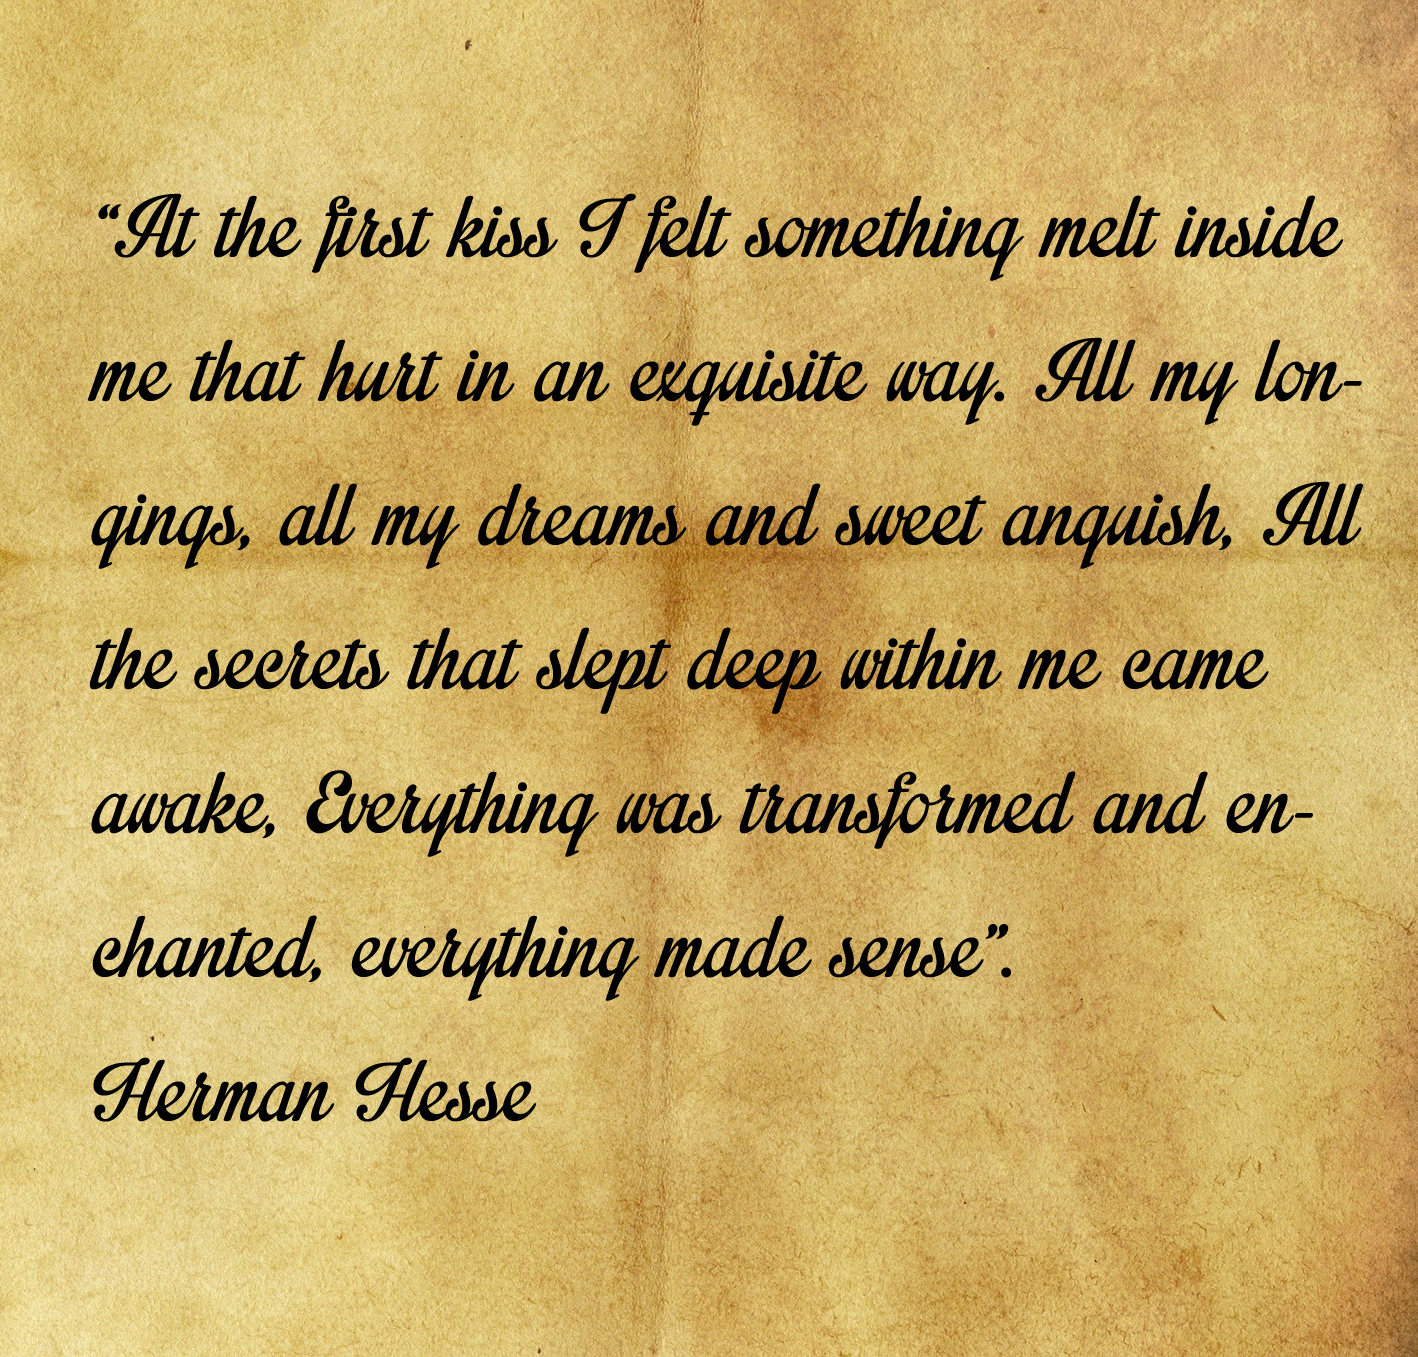 Herman Hesse's phrase of love